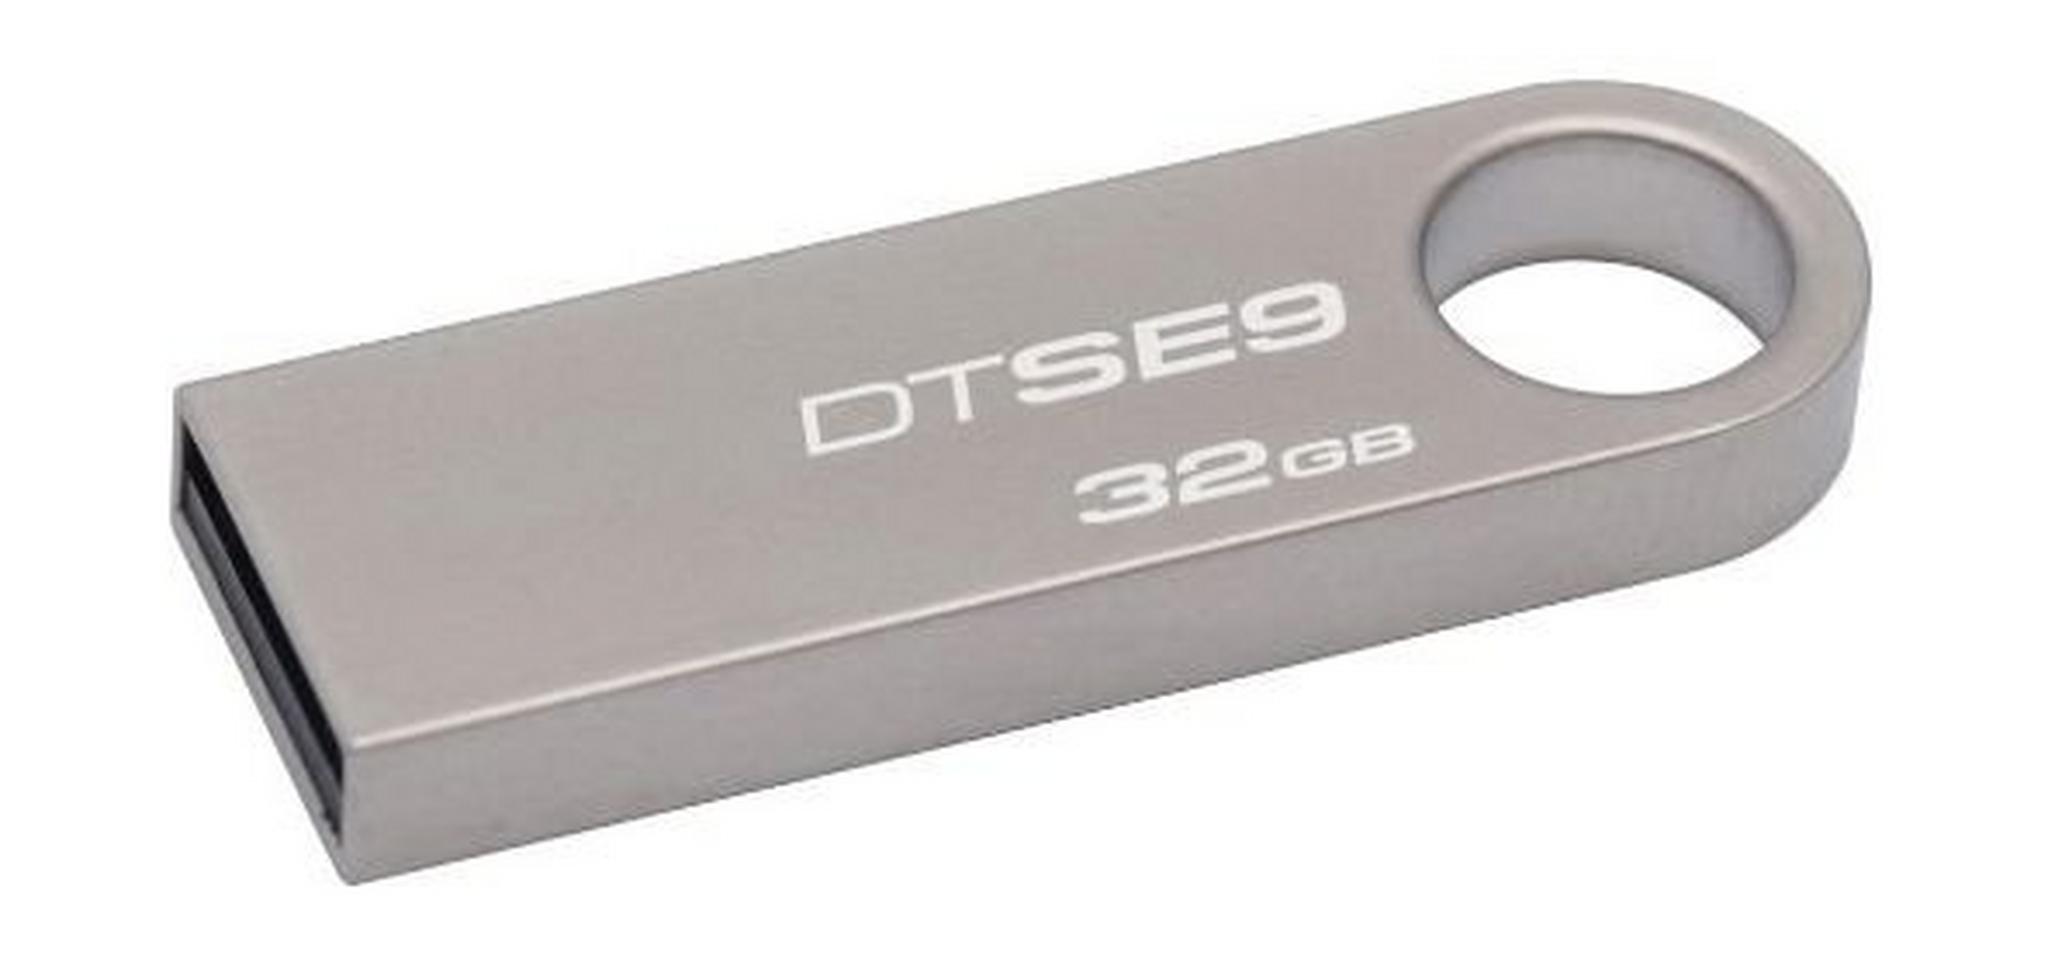 Kingston DataTraveler 32GB USB 2.0 Flash Drive Model DTSE9H/32GBZ